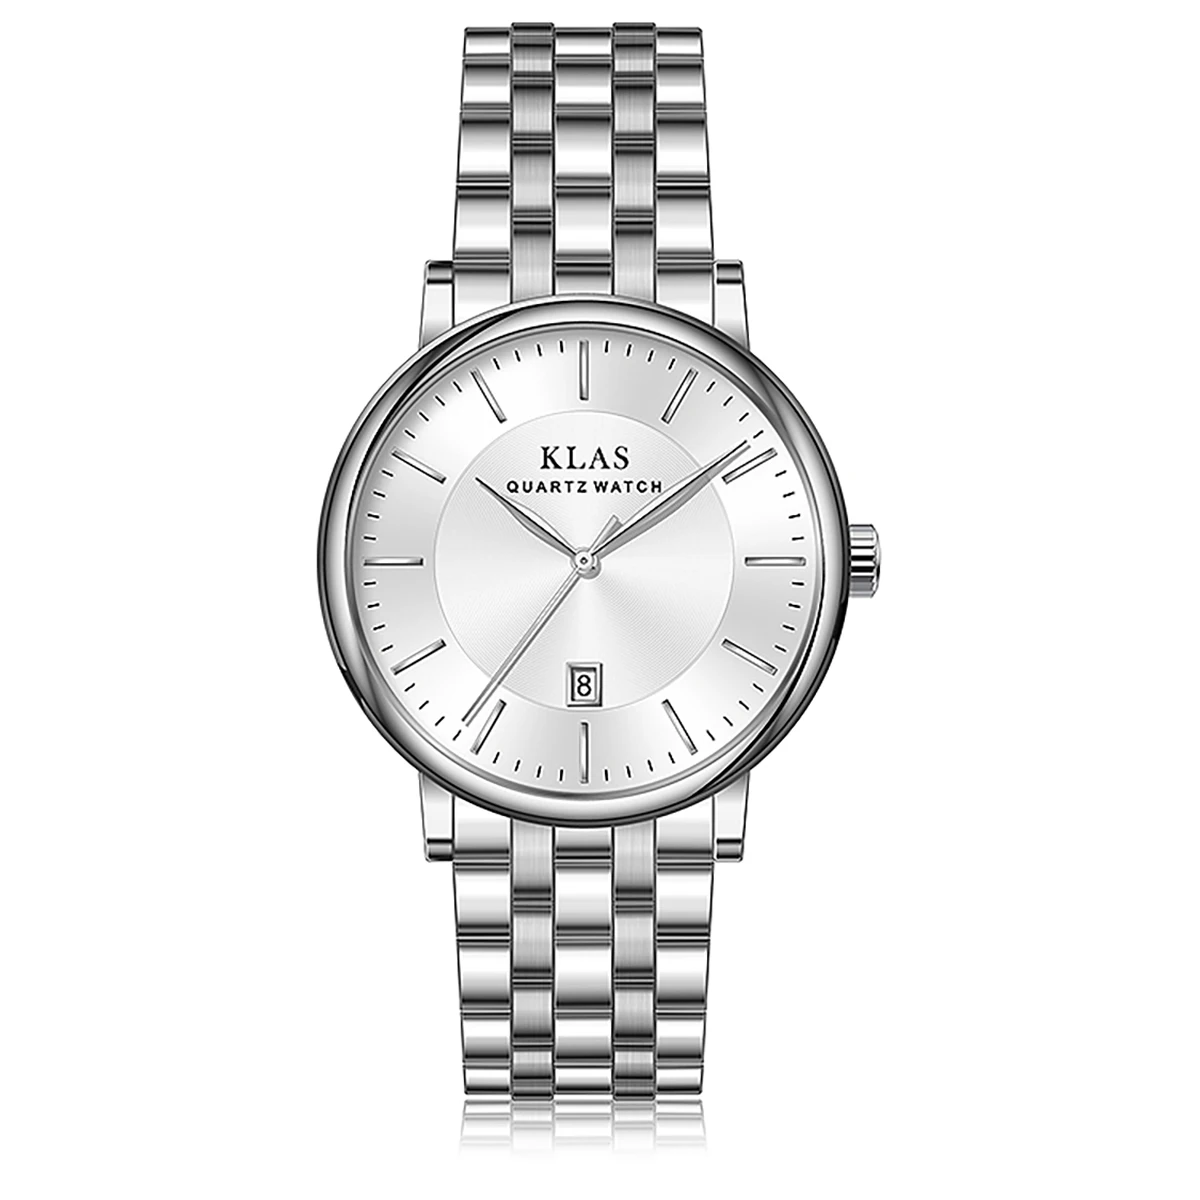 Fashionable Silver Quartz men's watch trend 35.0 mm engraved pattern dial, stainless steel watch 2021  KLAS brand